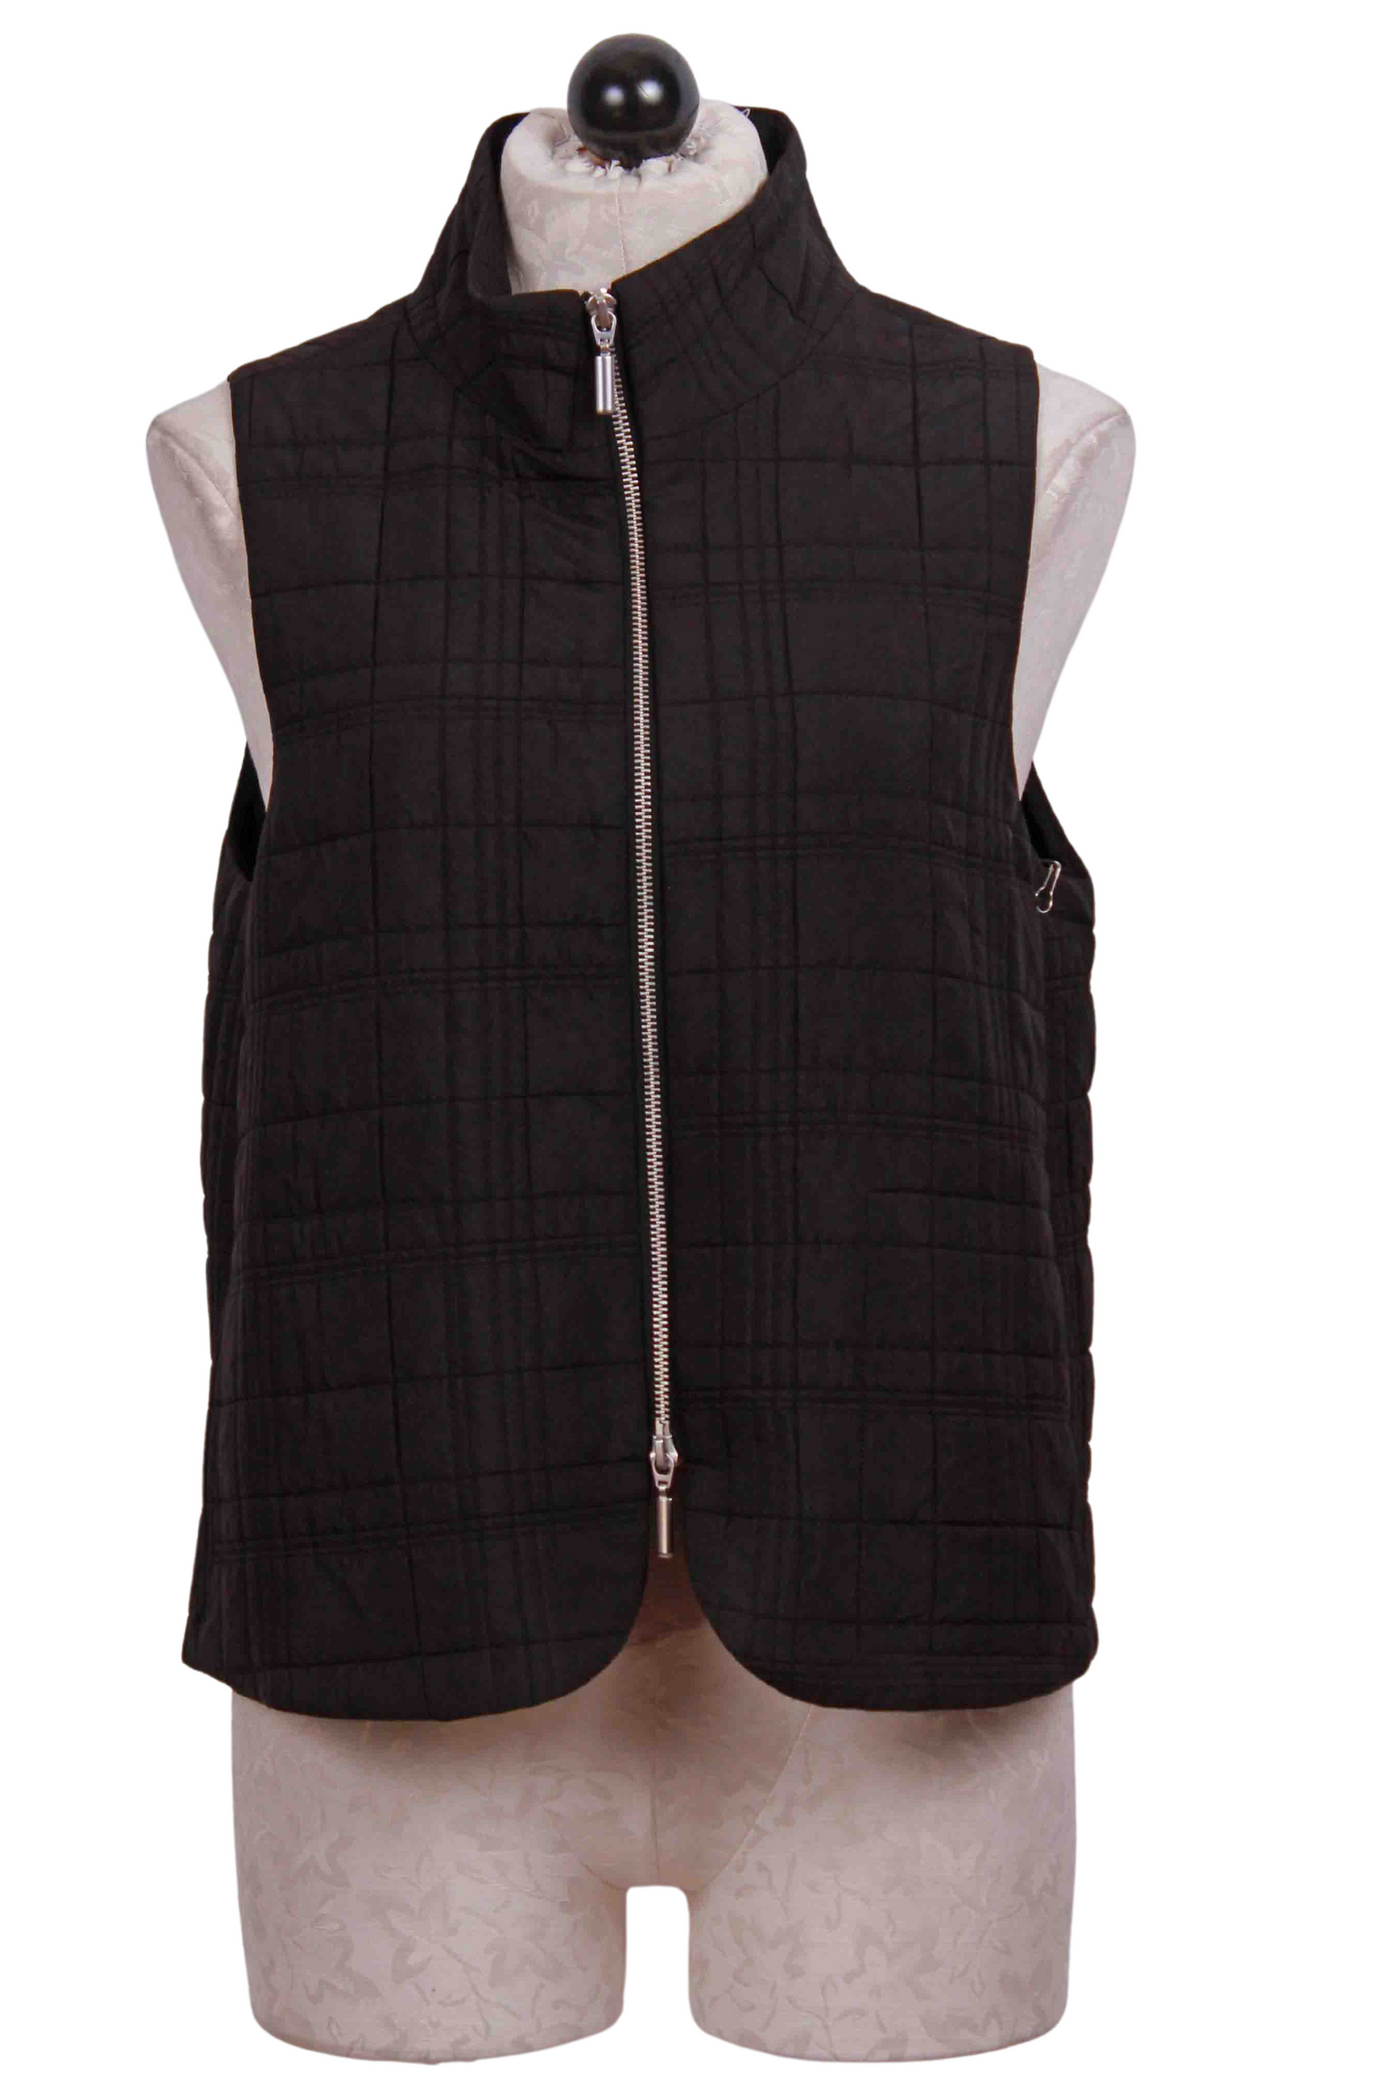 Black colored Zip Front Quilt Modern Vest by Liv by Habitat